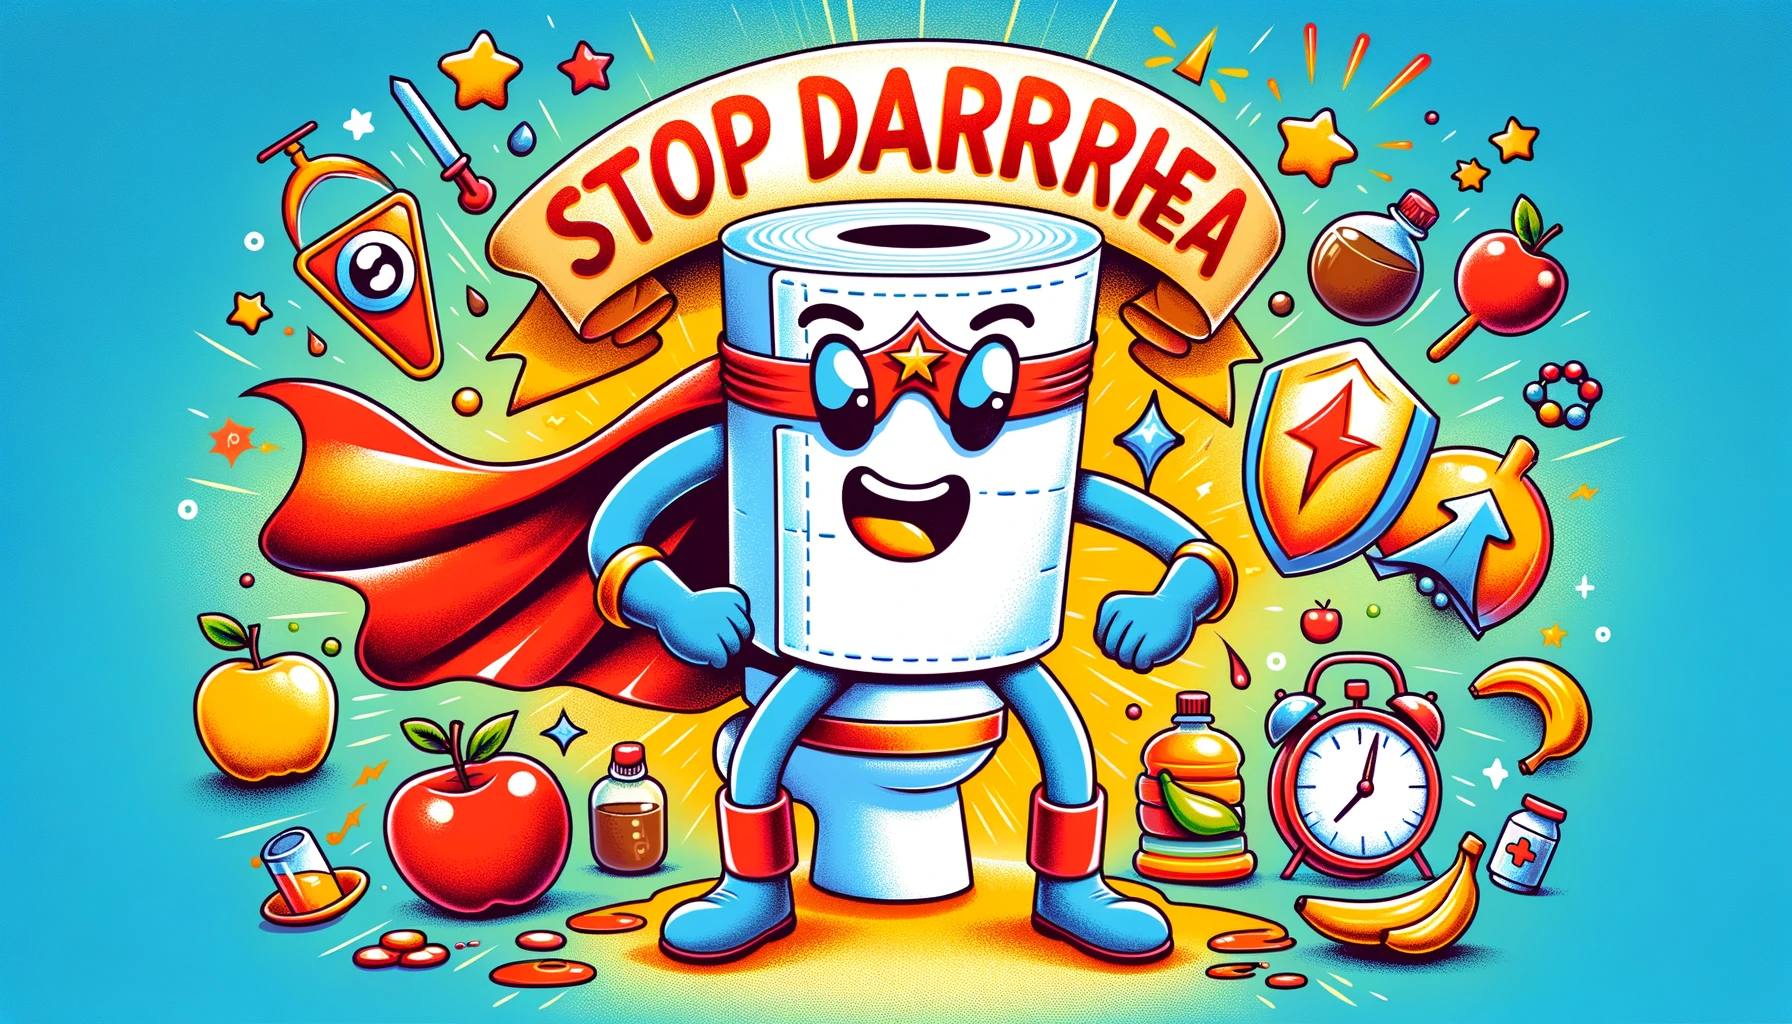 How to Stop Diarrhea